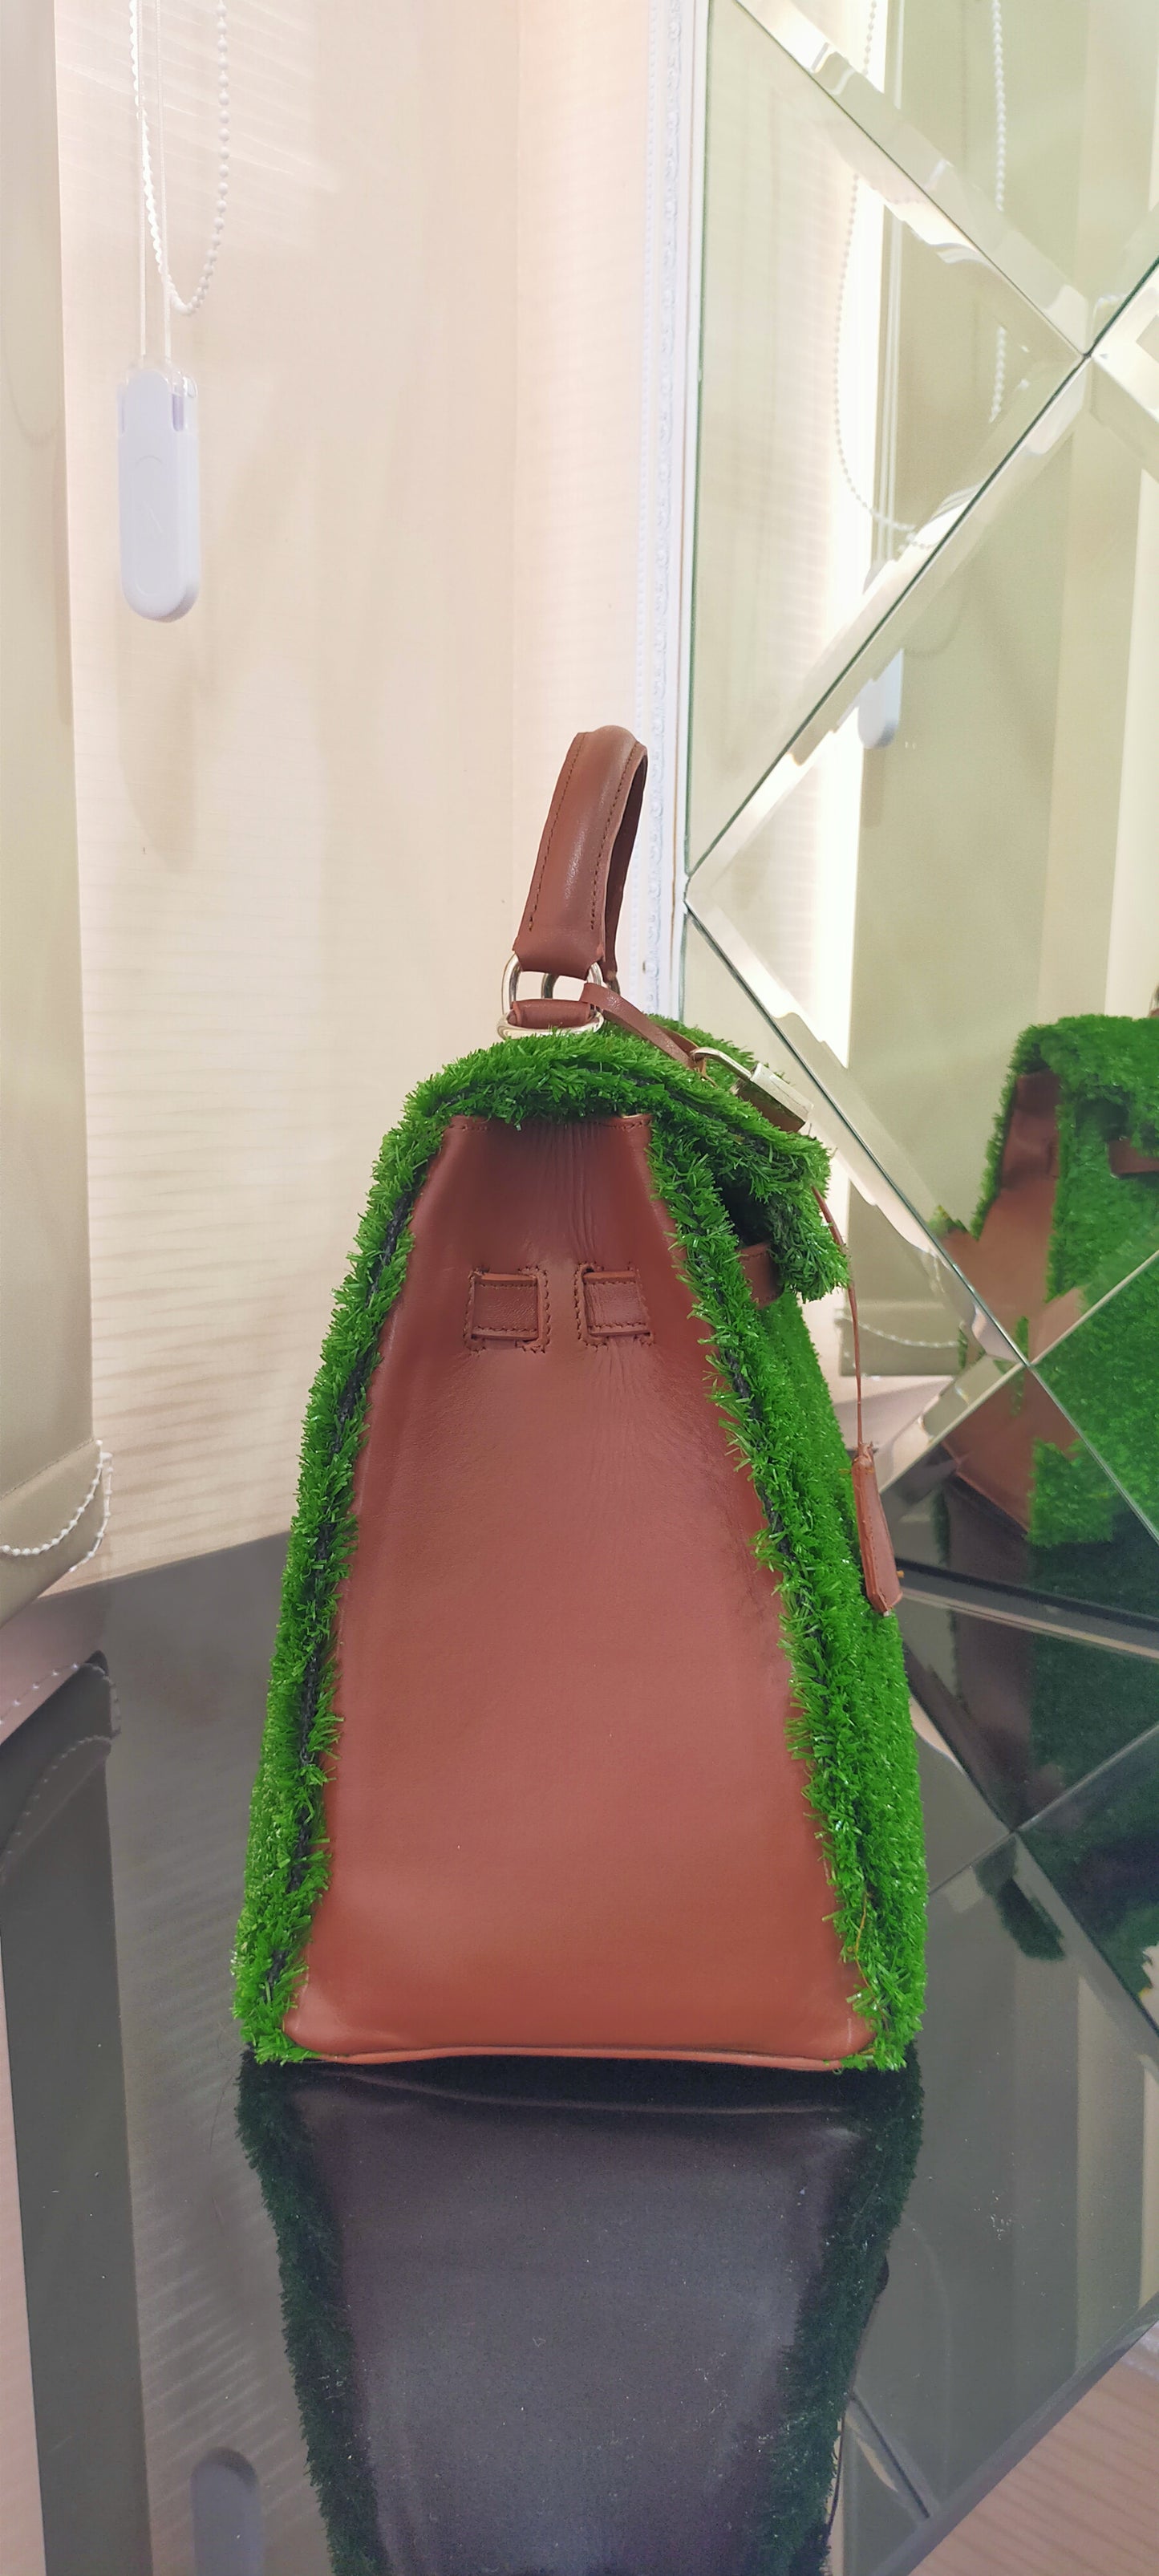 Handmade grassy with Brown genuine leather - Medium size (35cm)